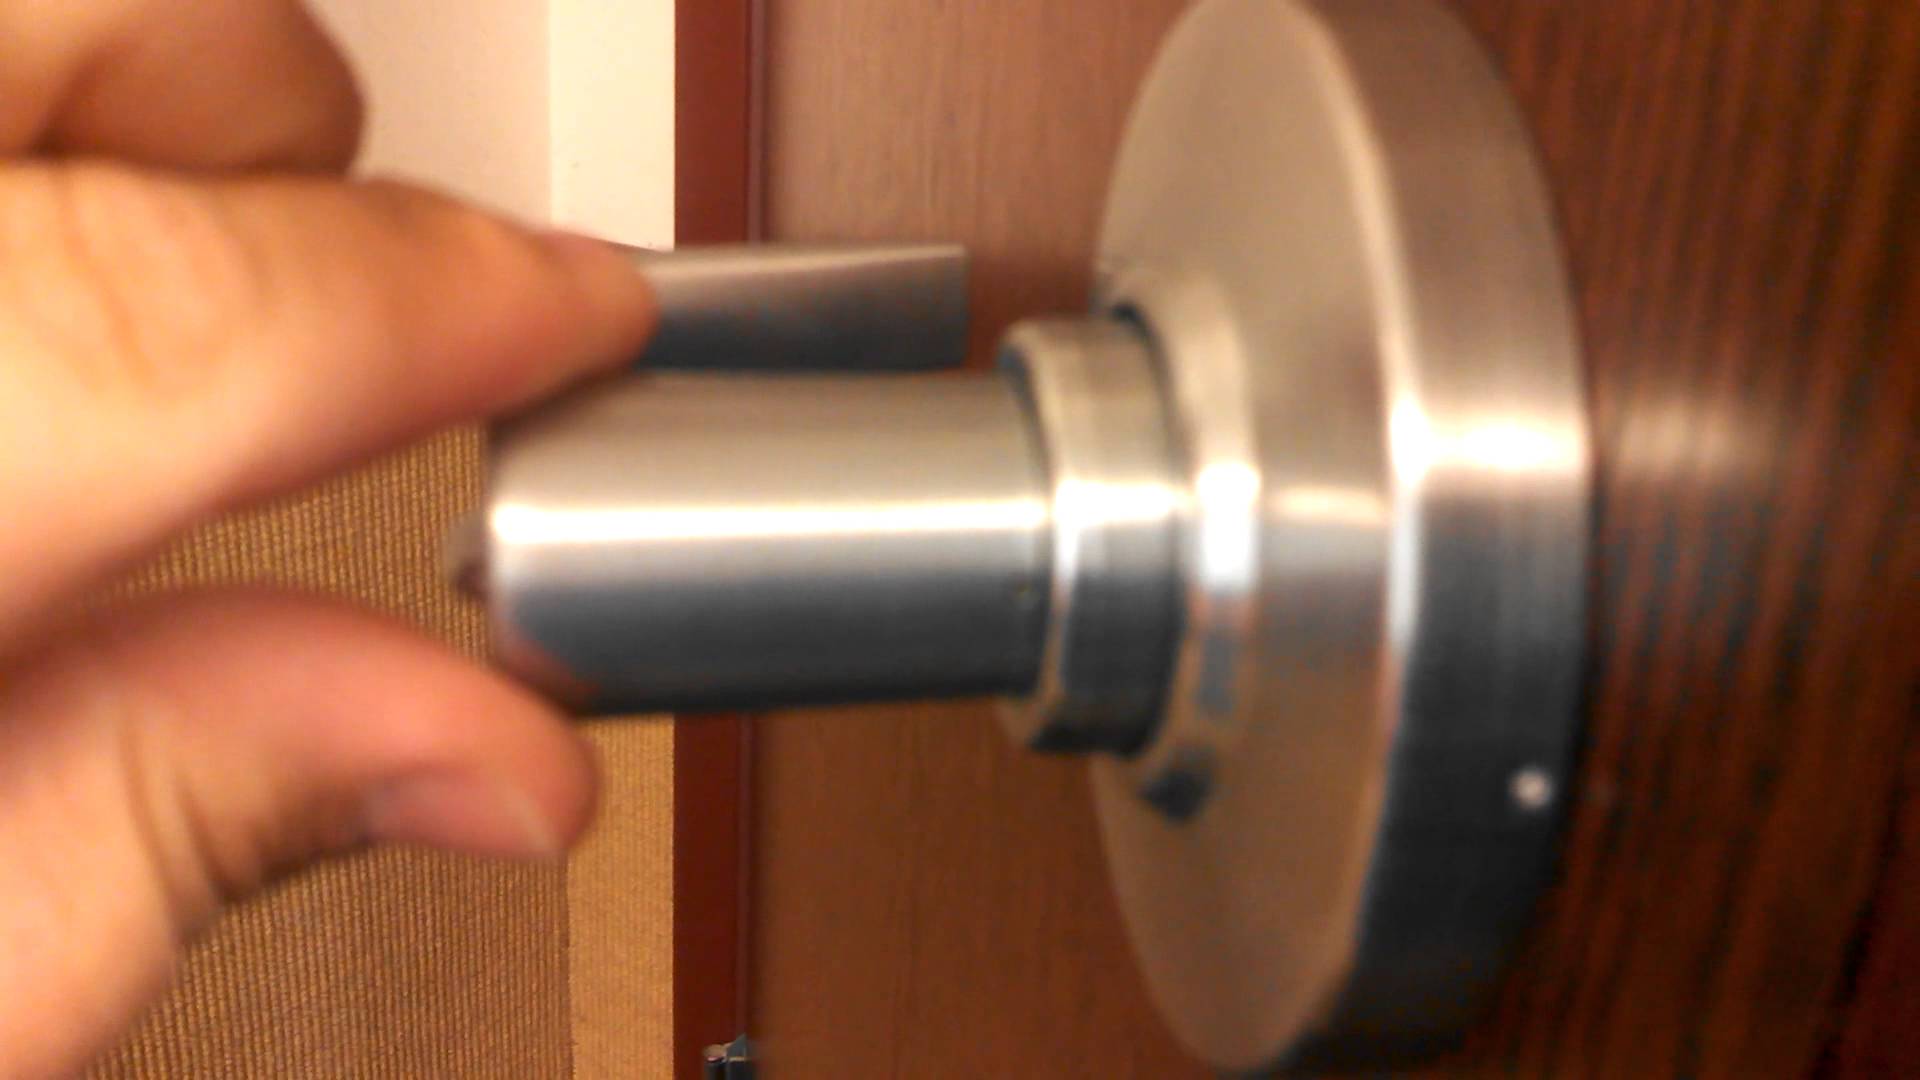 taking off a door knob photo - 6